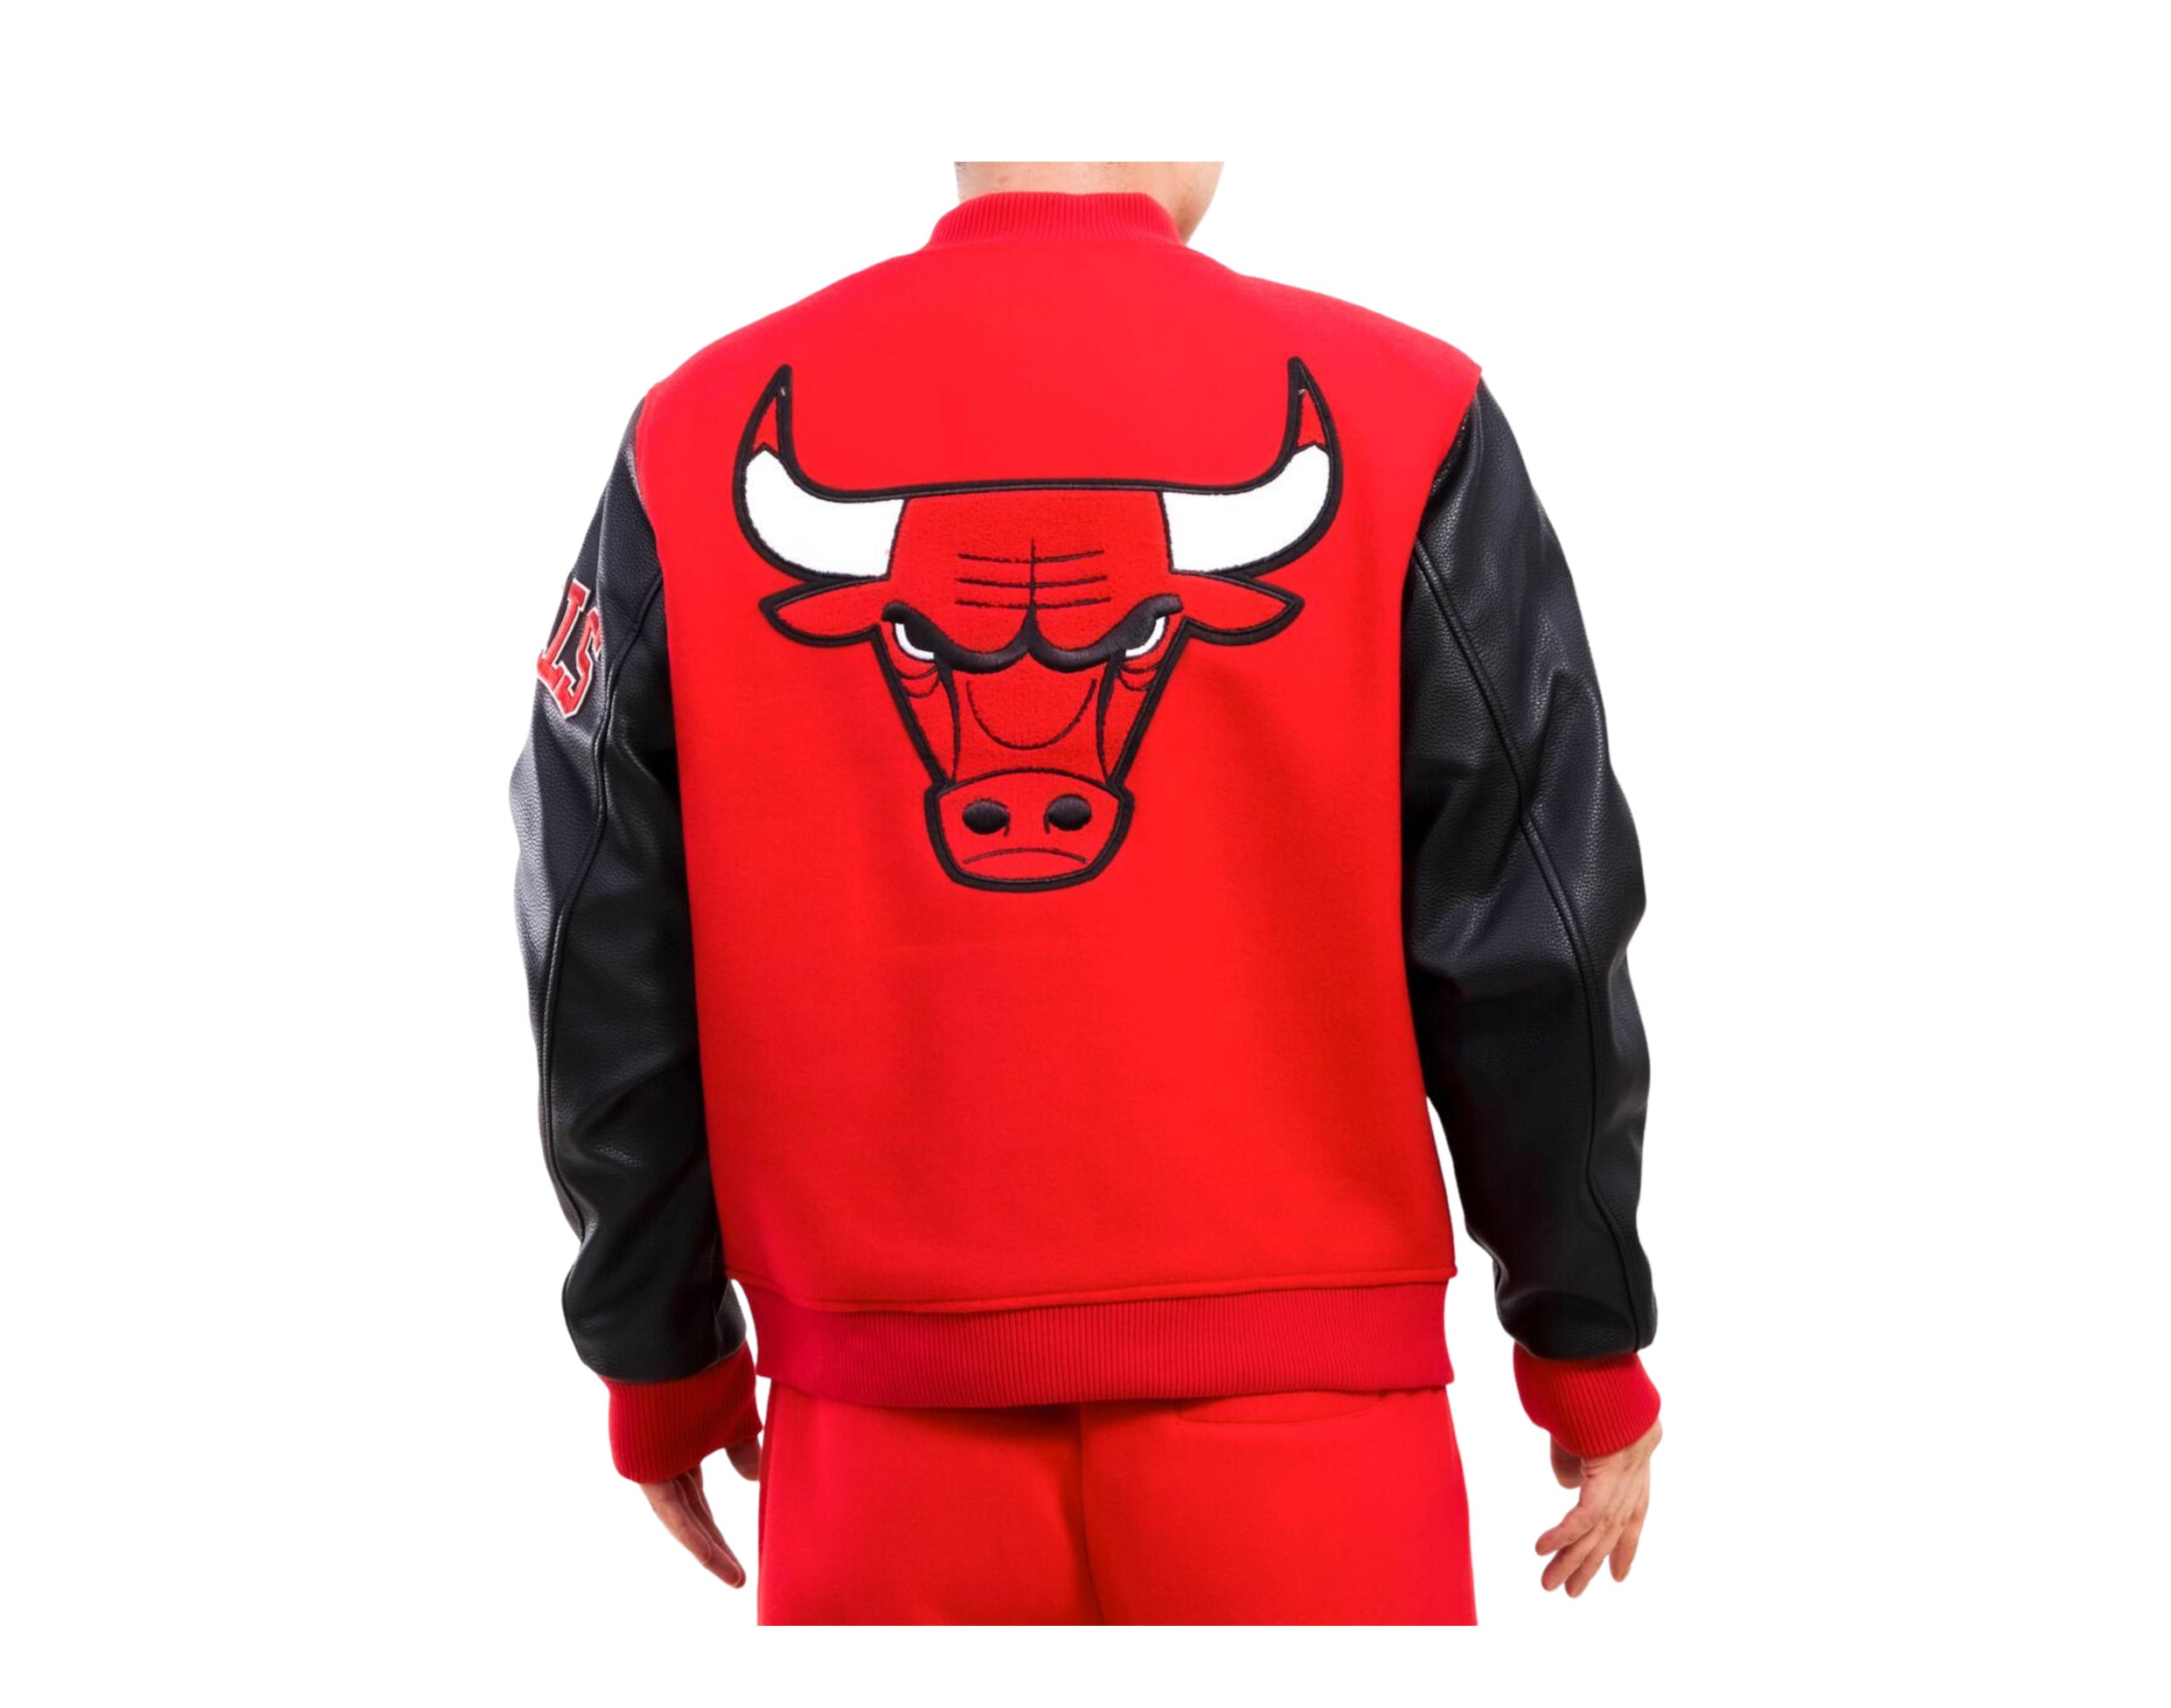 Buy the Mens Black NBA Chicago Bulls Full-Zip Long Sleeve Varsity Jacket  Size M